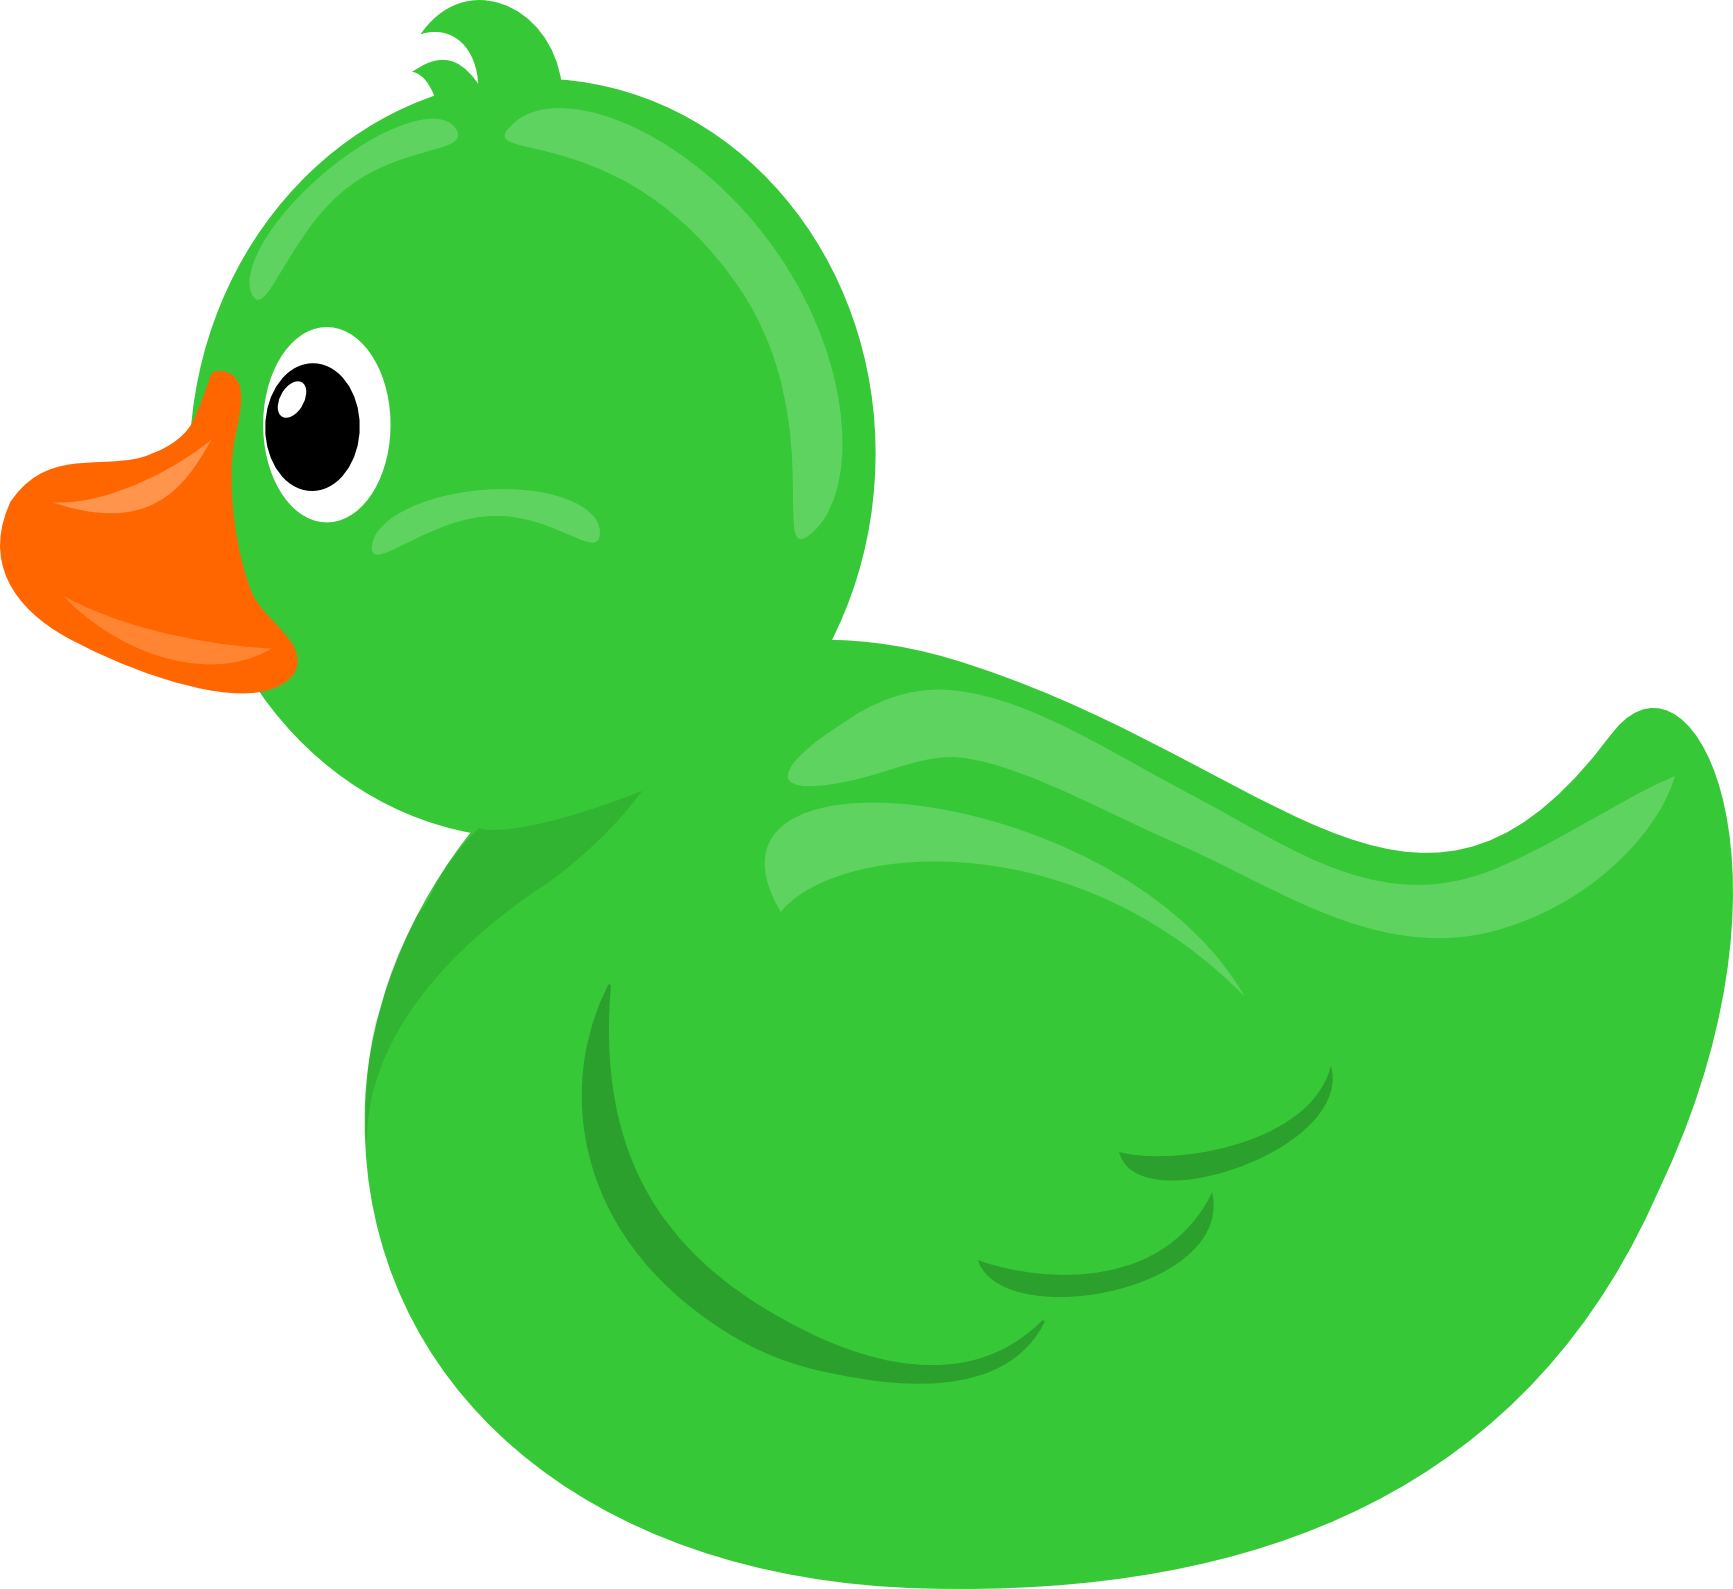 Desktop backgrounds rubber a. Duckling clipart group duck